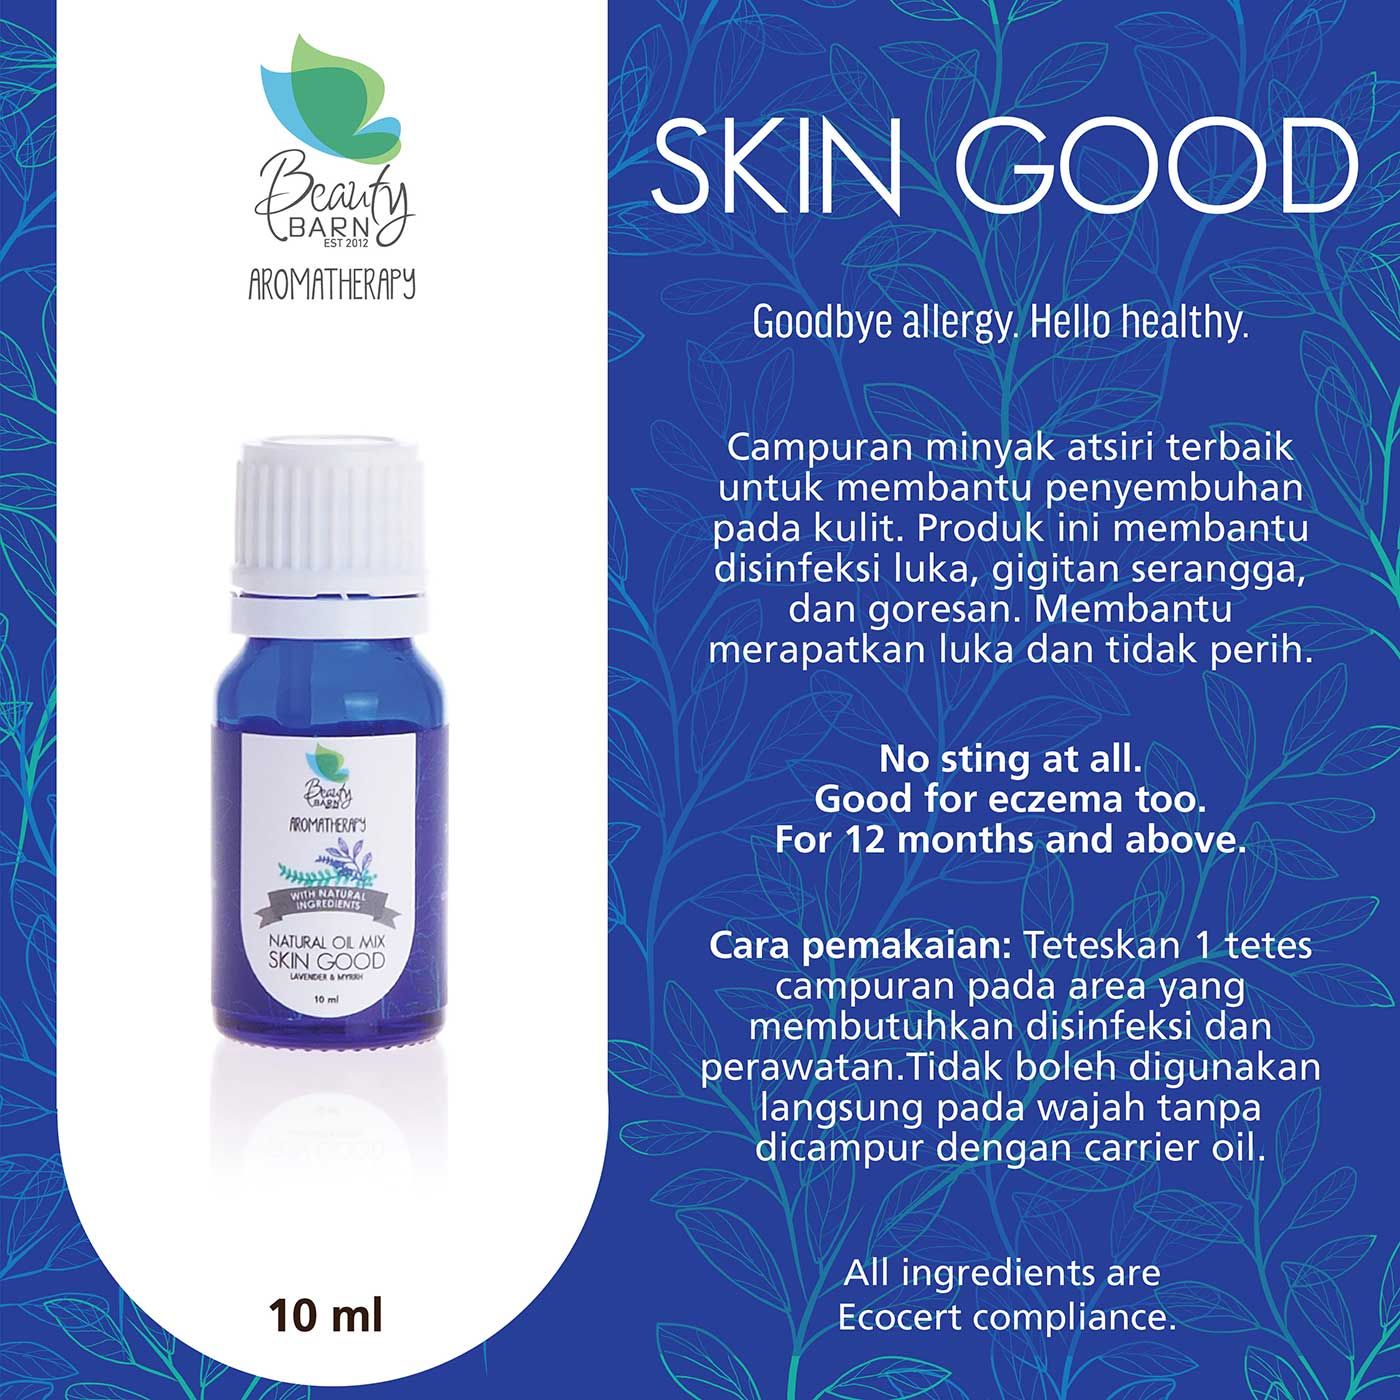 Beauty Barn Aromatherapy - Skin Good 10 mL - 3